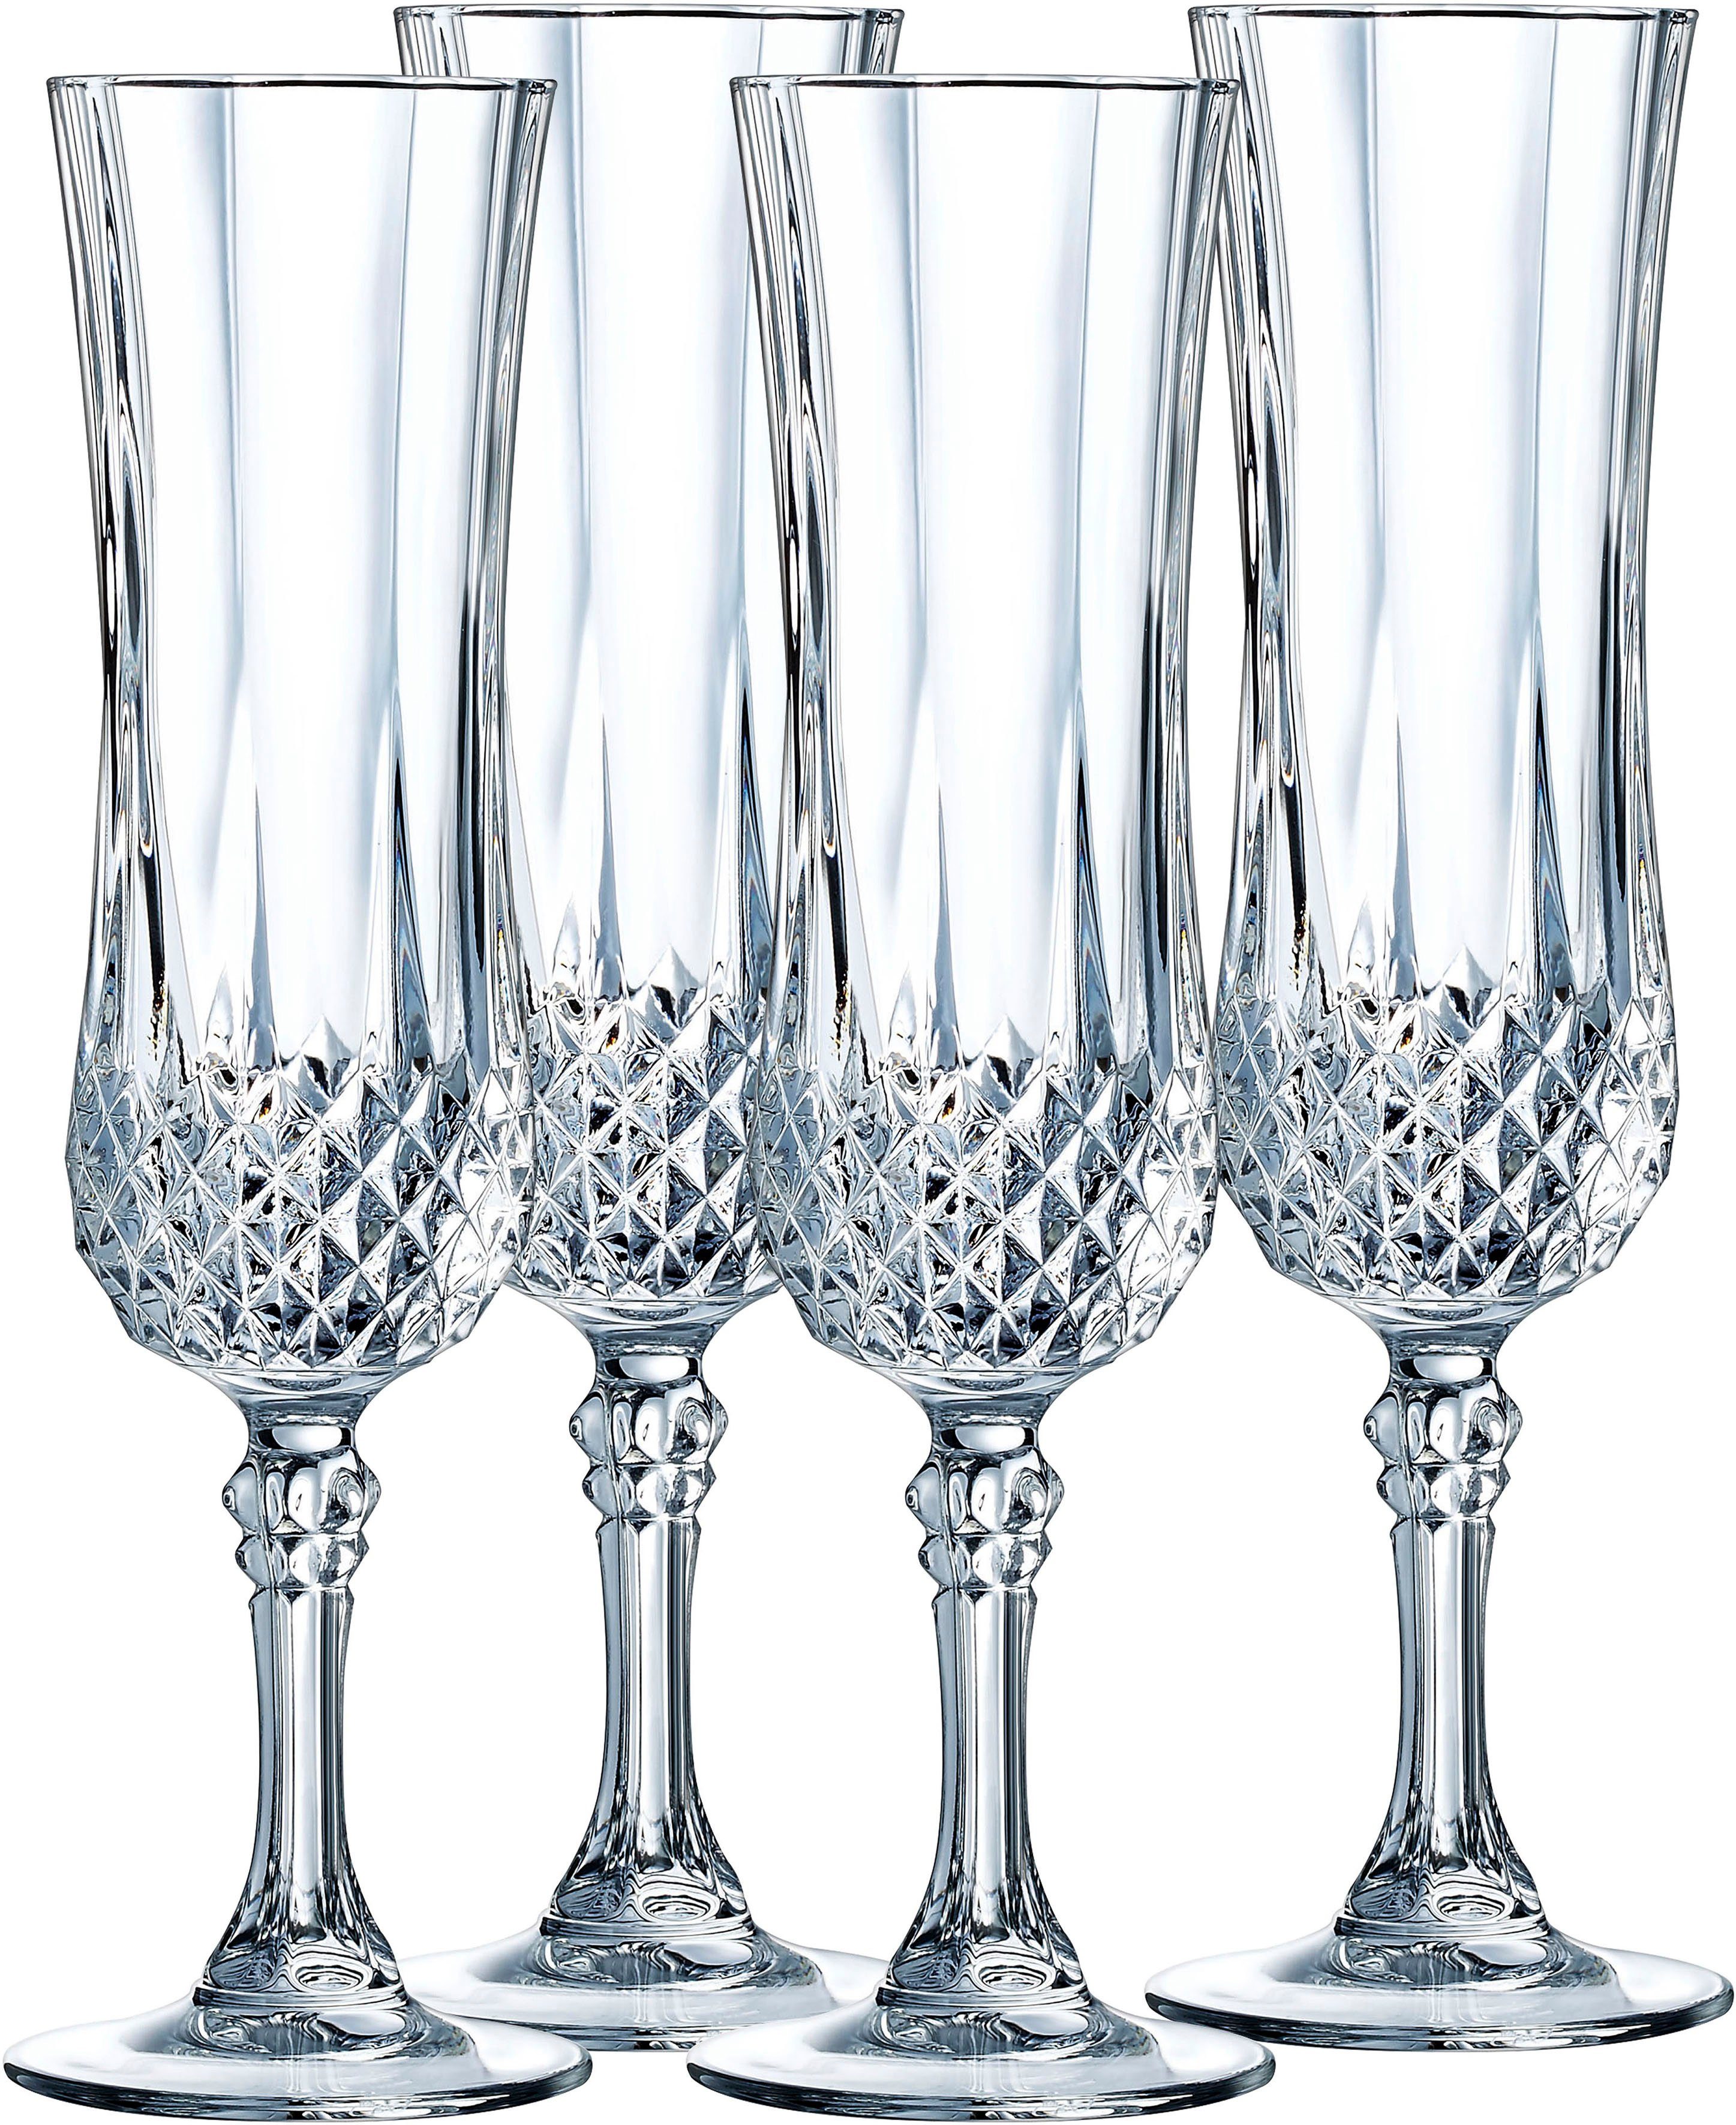 Luminarc Sektglas Trinkglas Longchamp Eclat, Glas, Стекло Set, sehr hochwertiges Kristallinglas